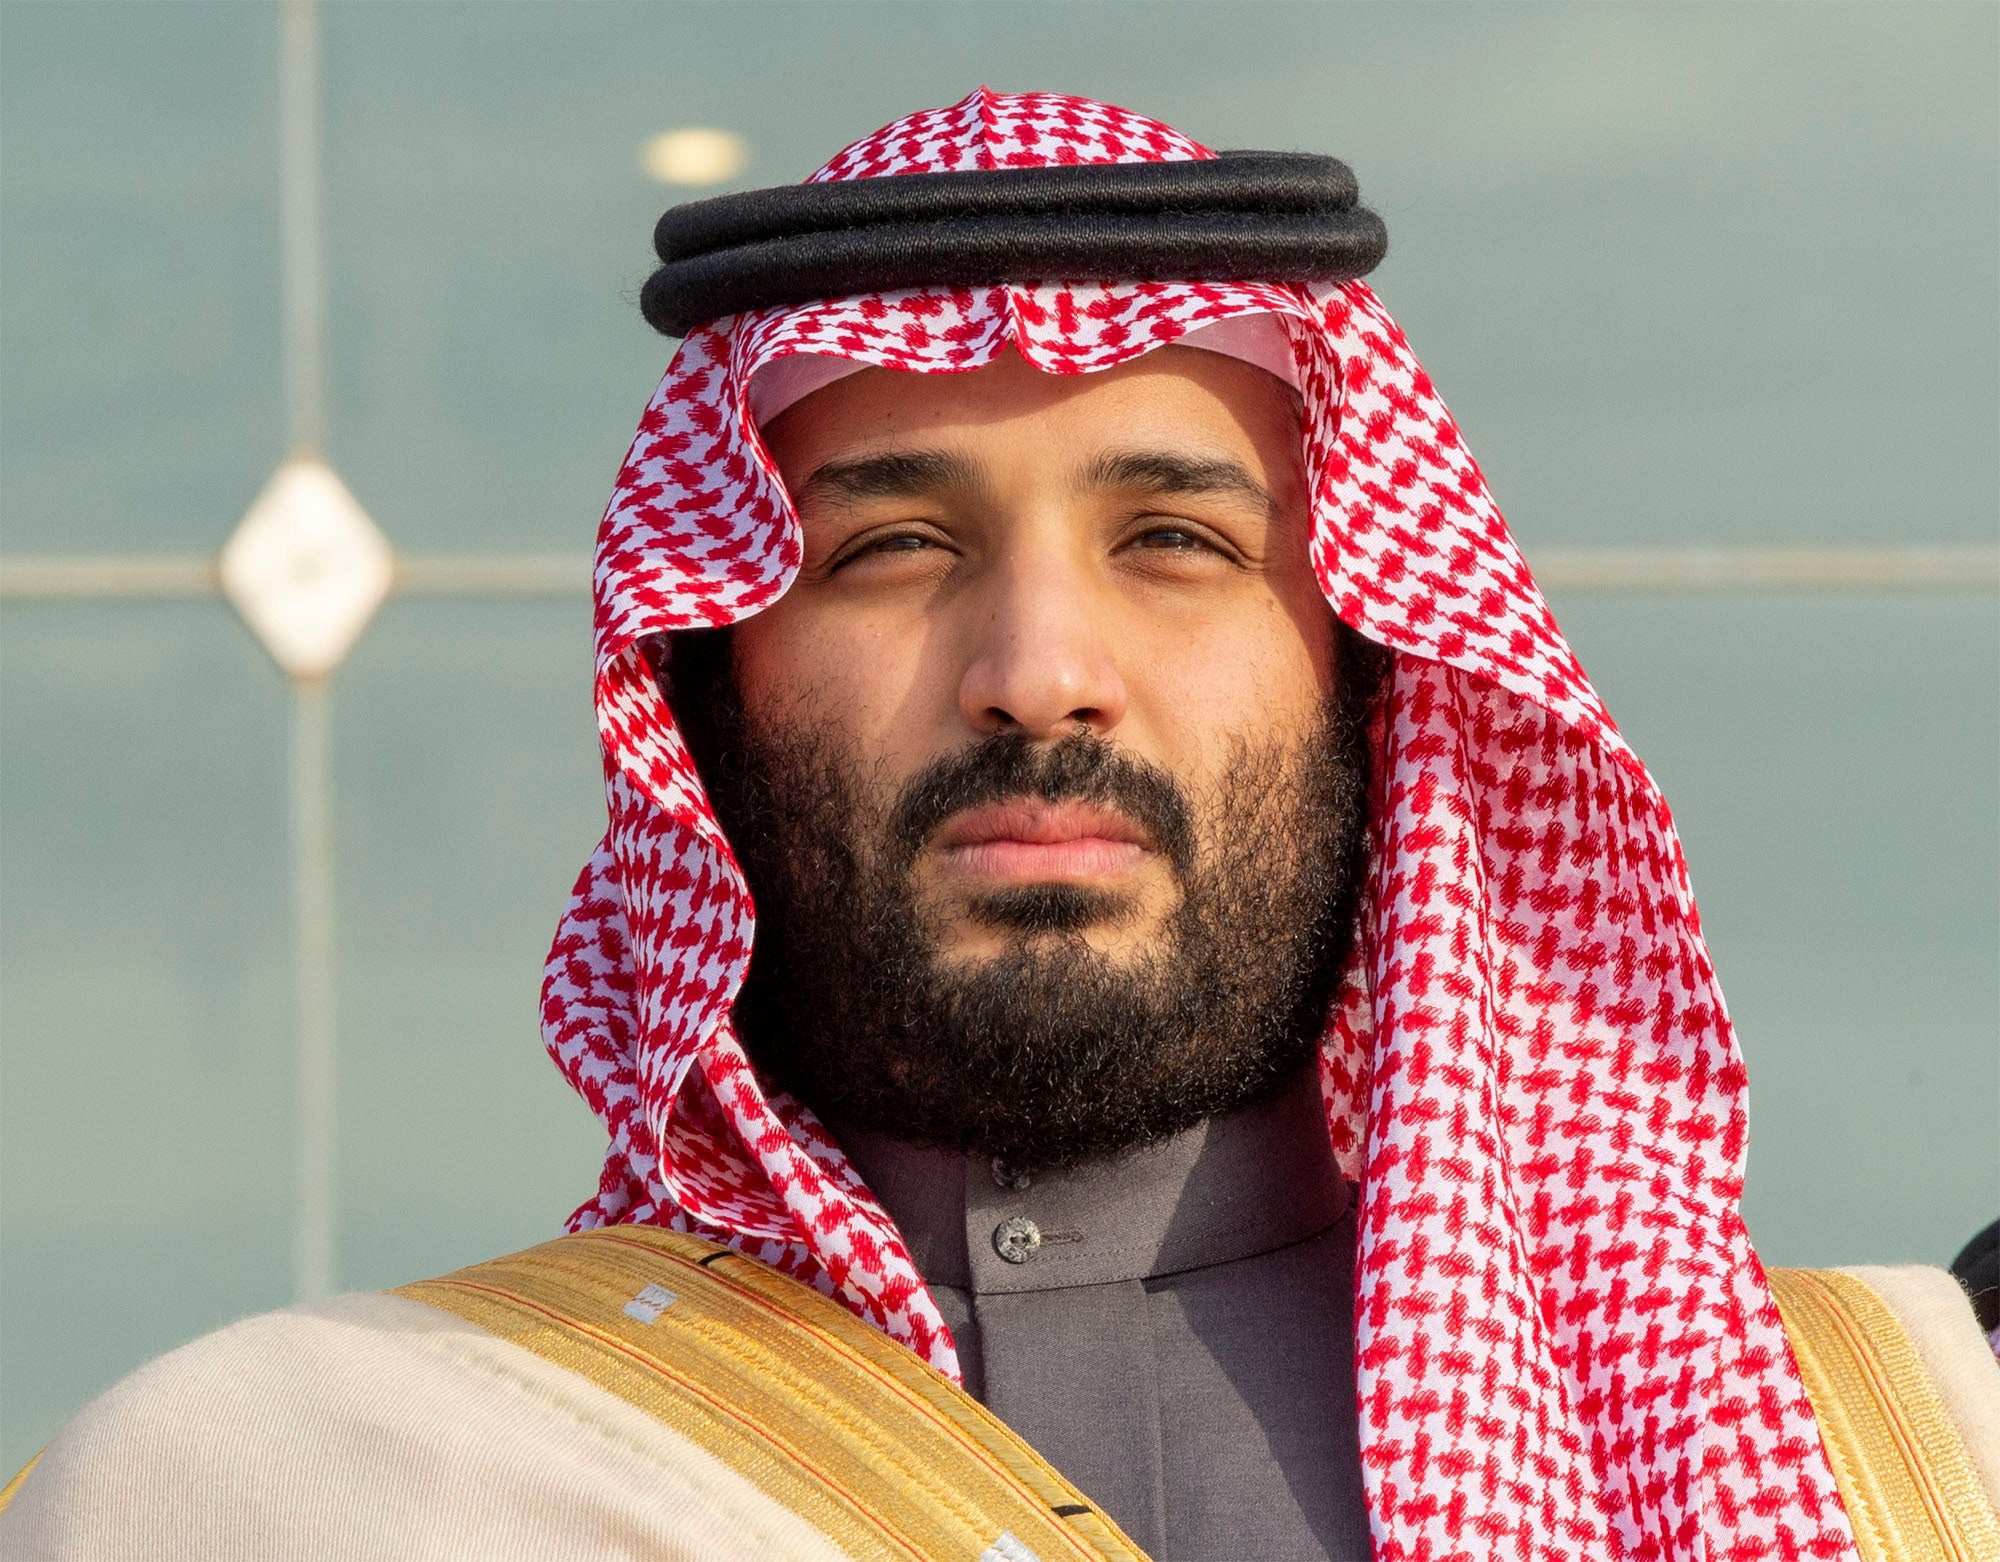 Saudi Arabia’s Crown Prince Mohammed bin Salman, pictured in 2018, personally ordered Jamal Kashoggi’s capture or murder according to US intelligence